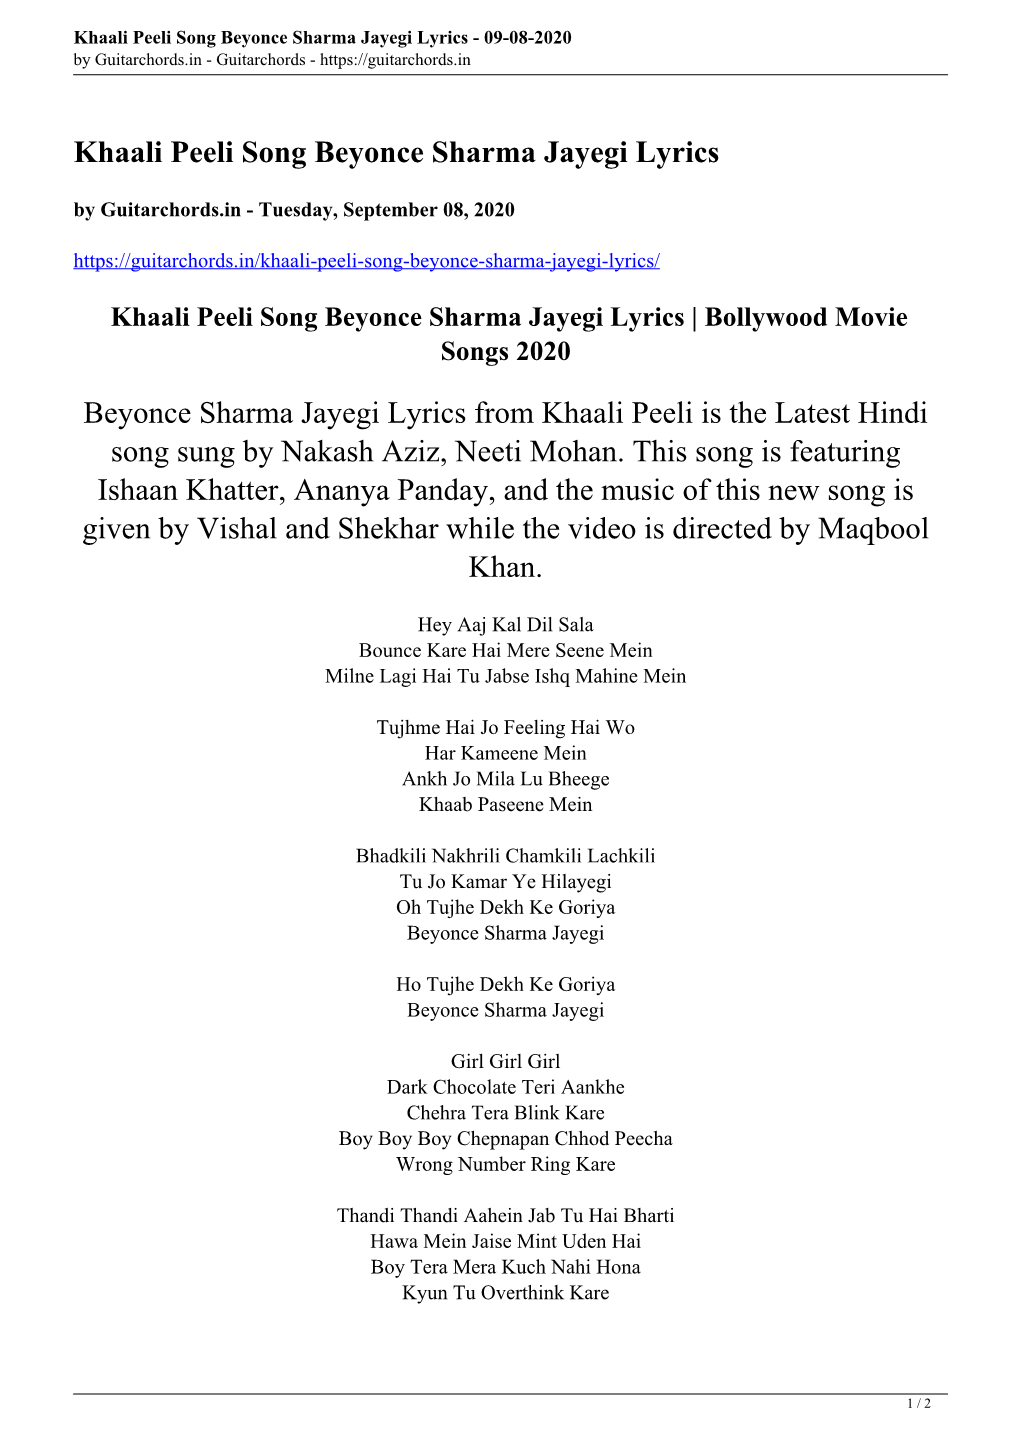 Khaali Peeli Song Beyonce Sharma Jayegi Lyrics - 09-08-2020 by Guitarchords.In - Guitarchords